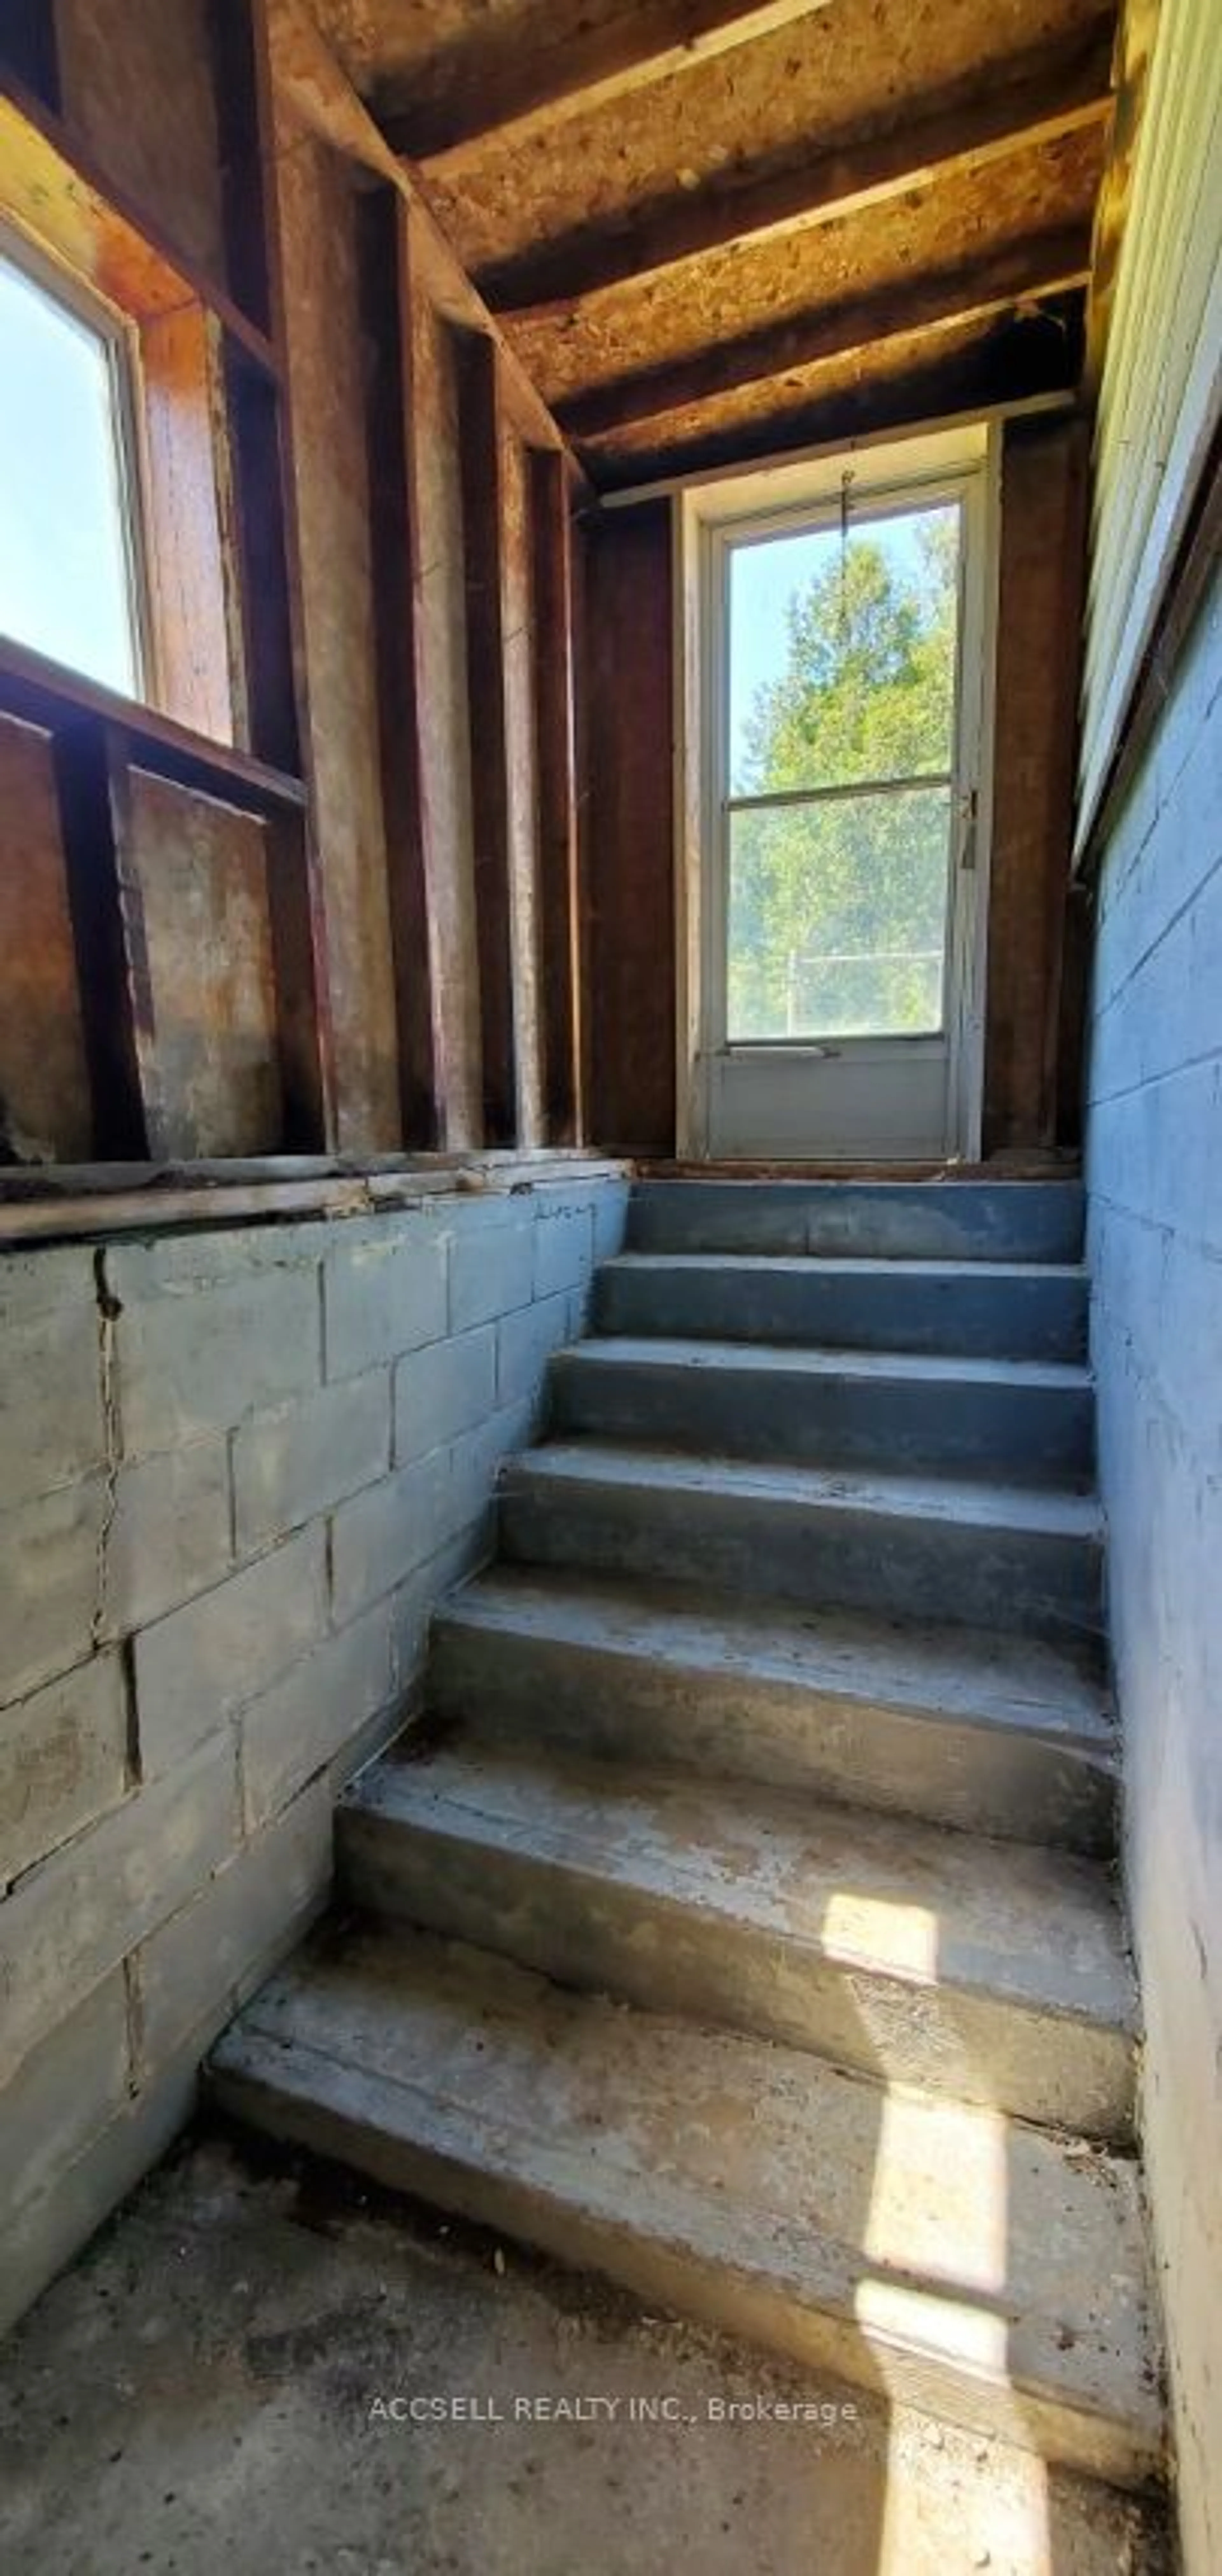 Stairs for 13144 27 Sdrd, Halton Hills Ontario L7G 4S4